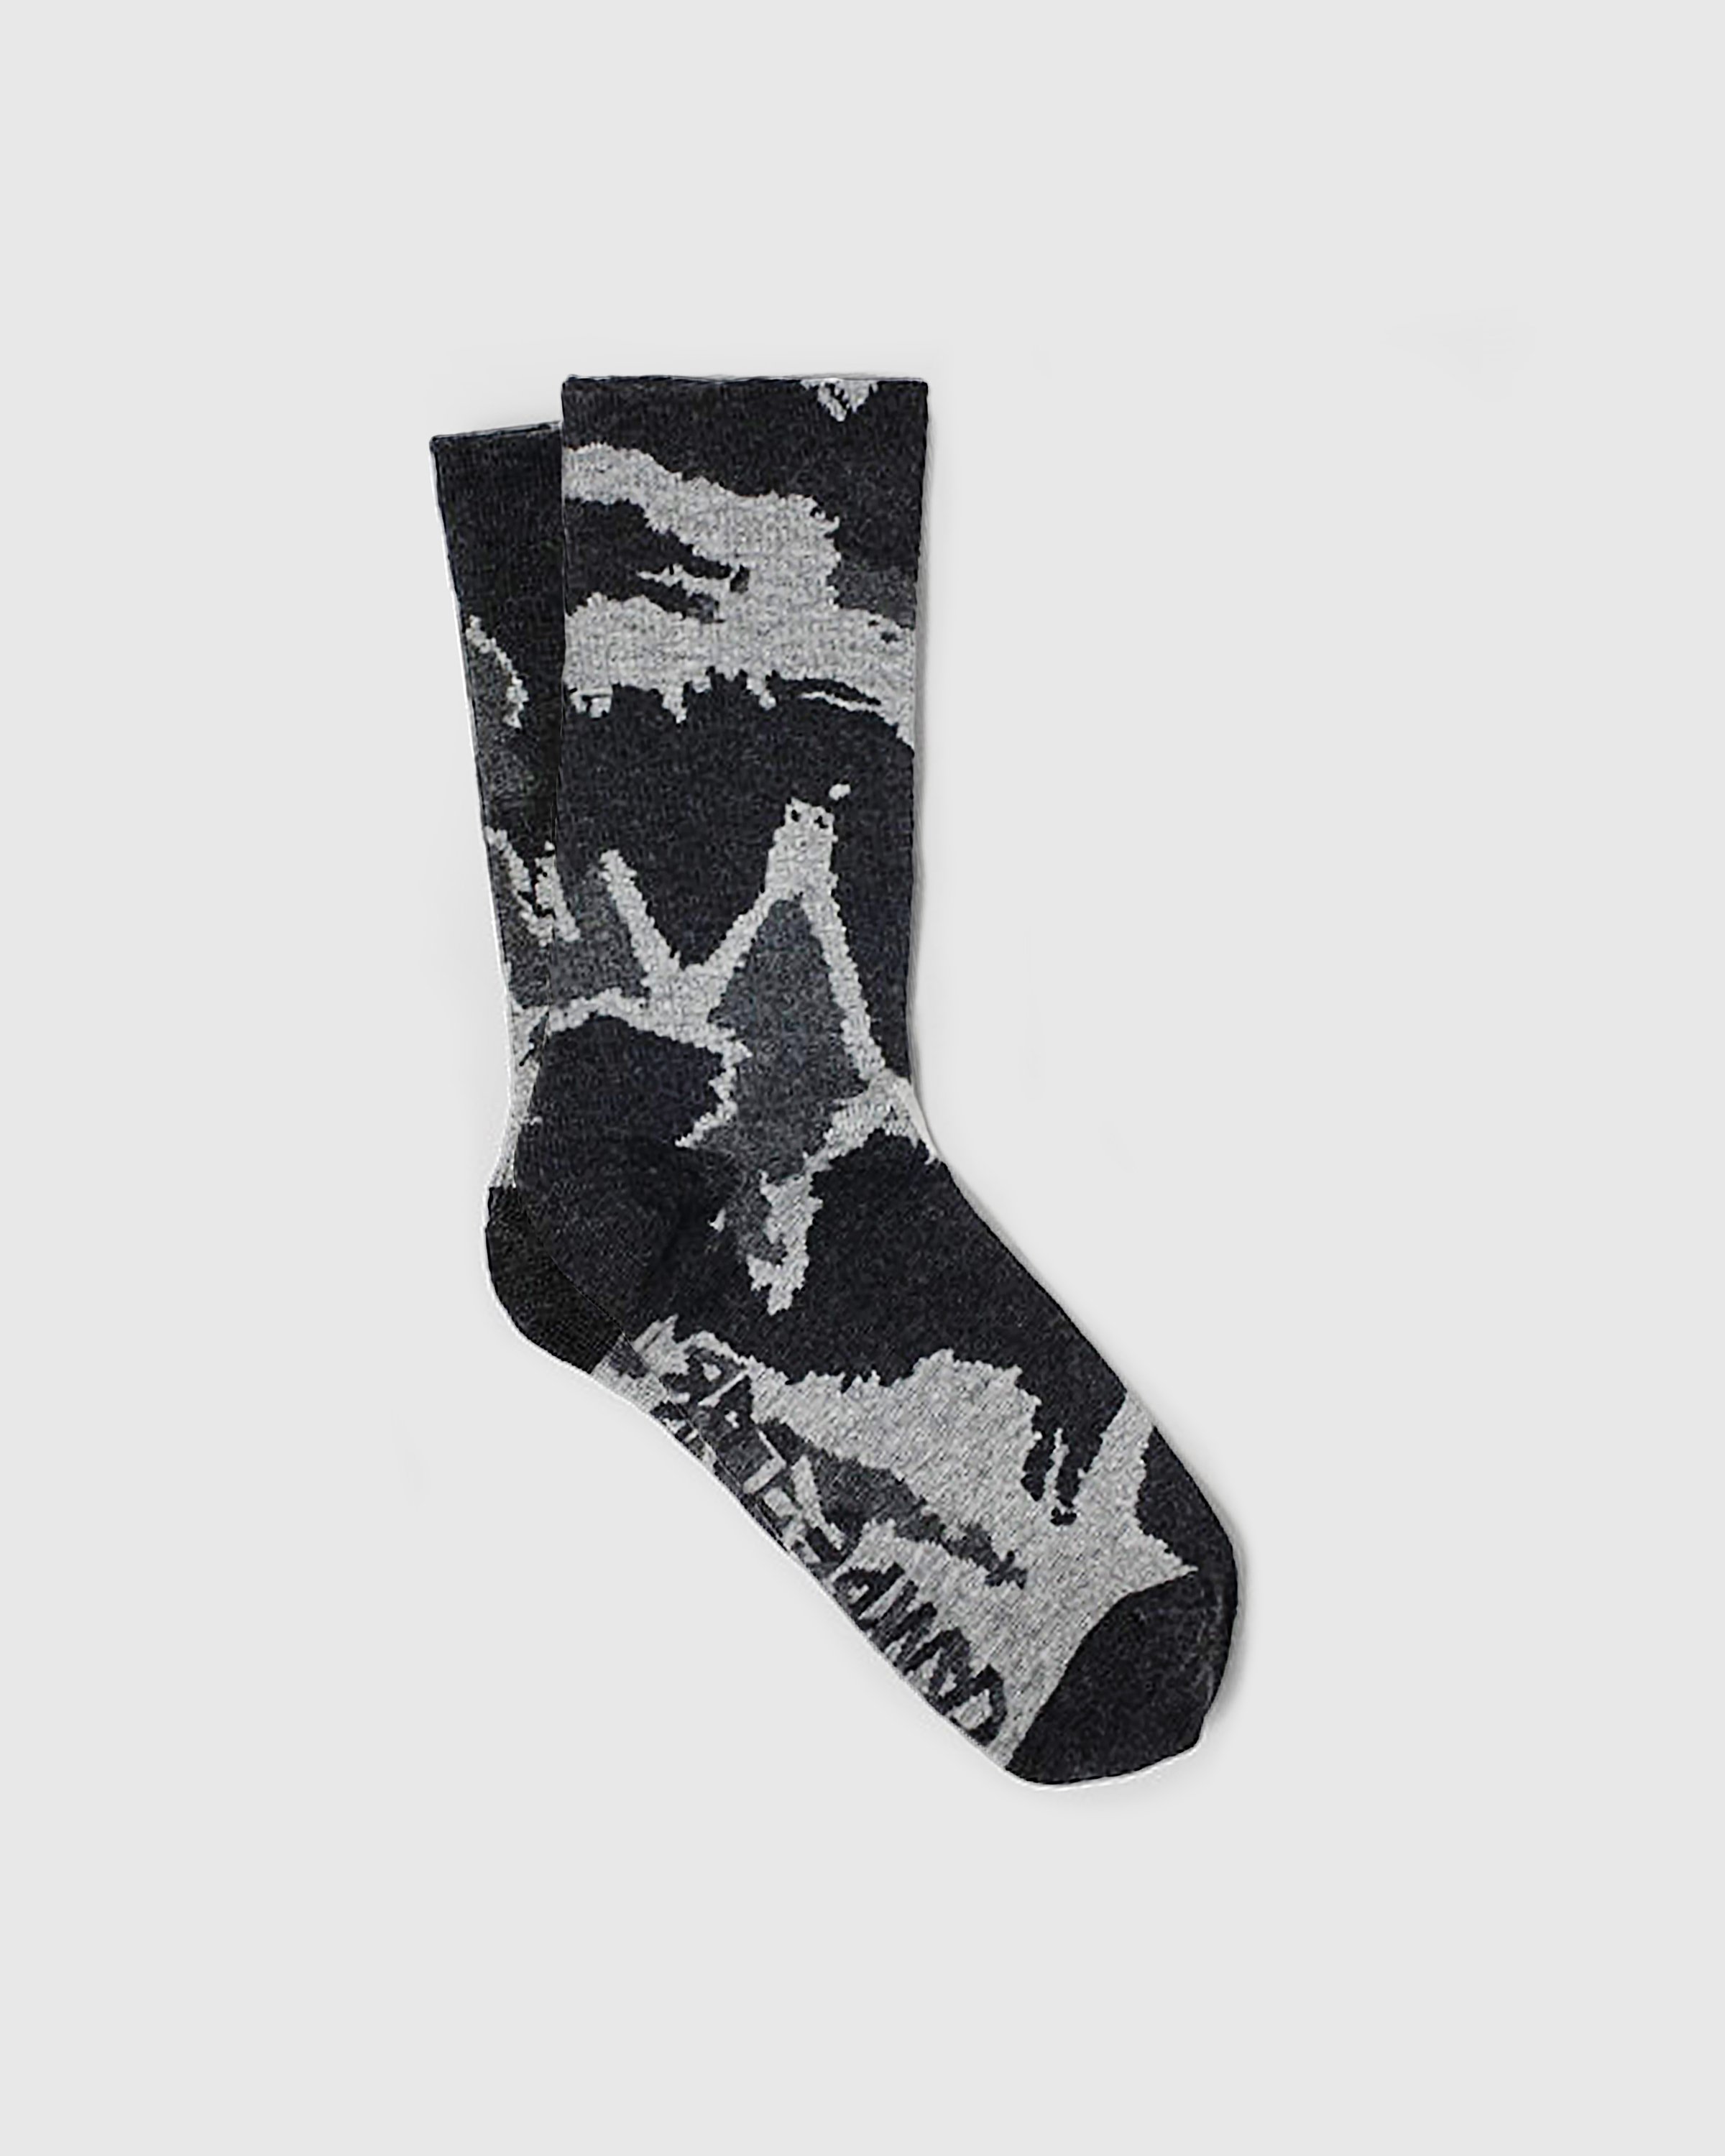 CAMPERLAB - Socks - Accessories - Multi - Image 1